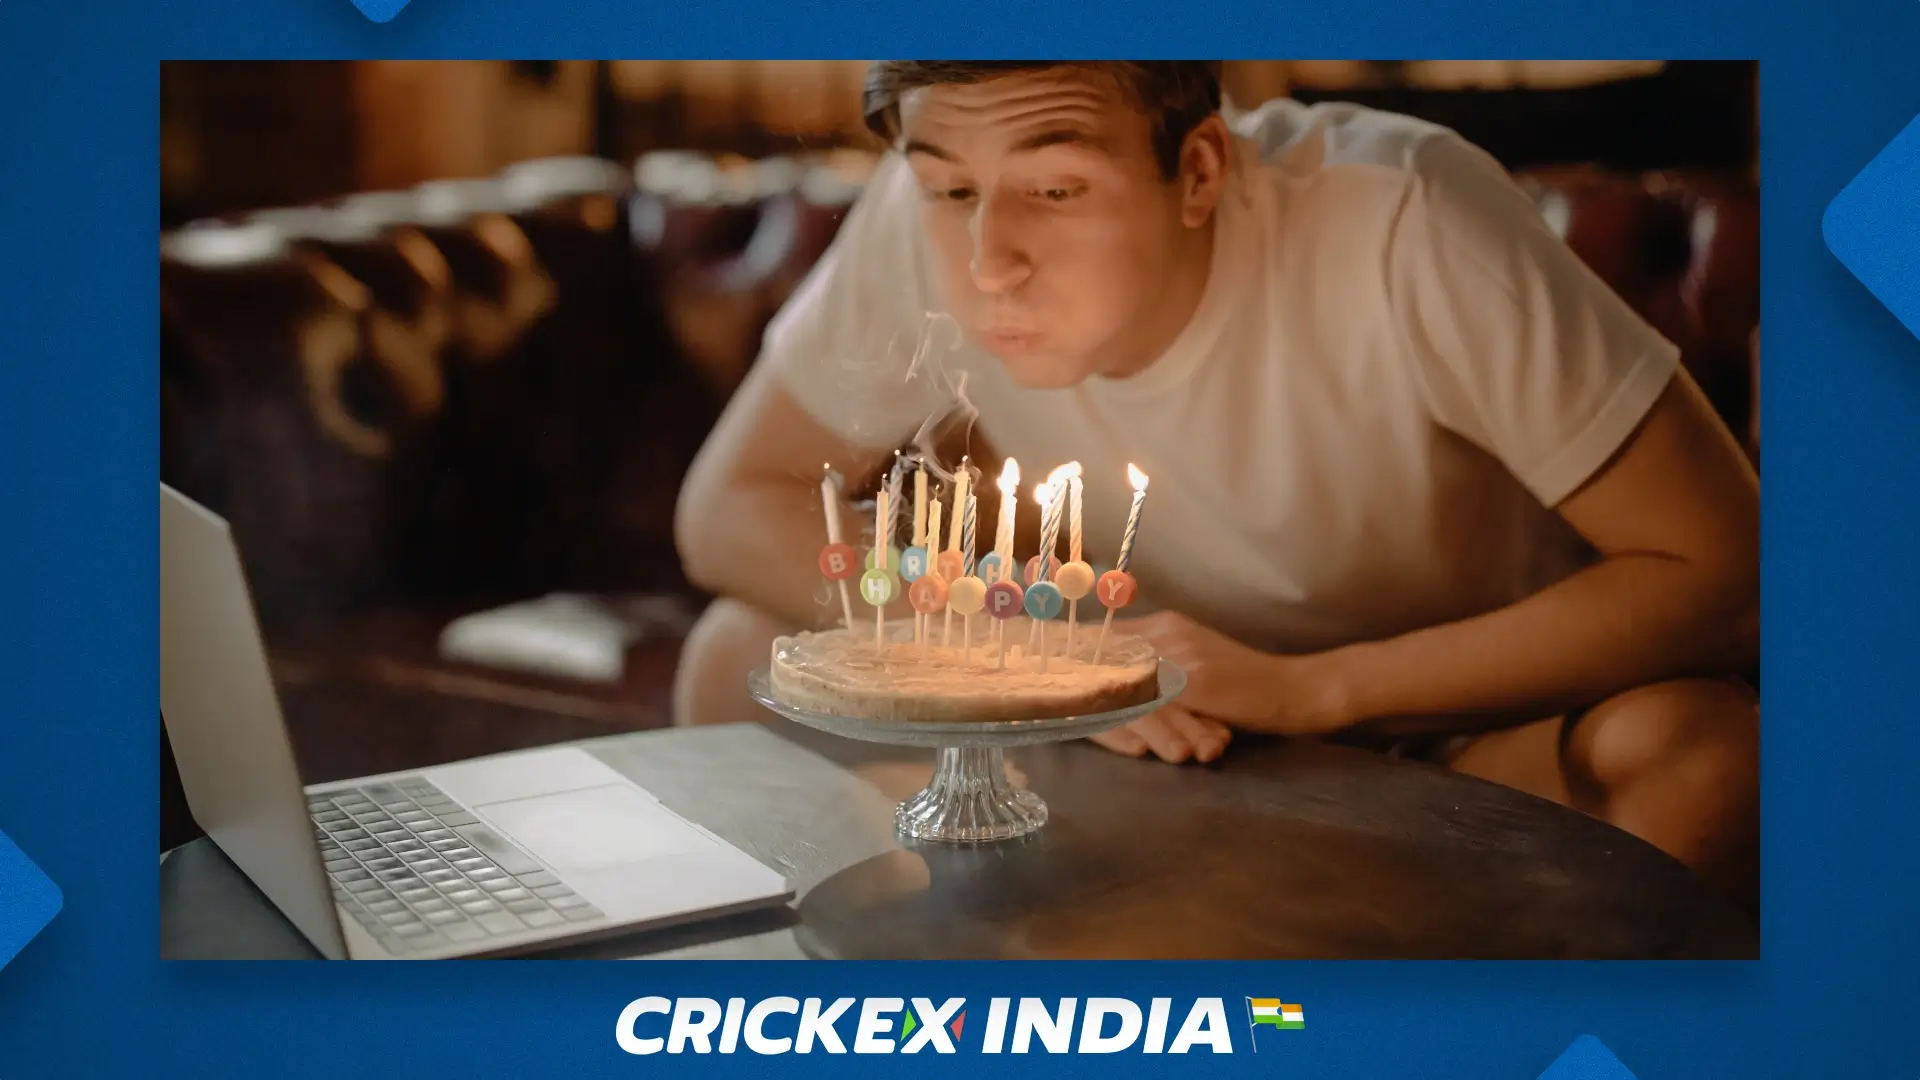 Crickex birthday bonus for the client's birthday